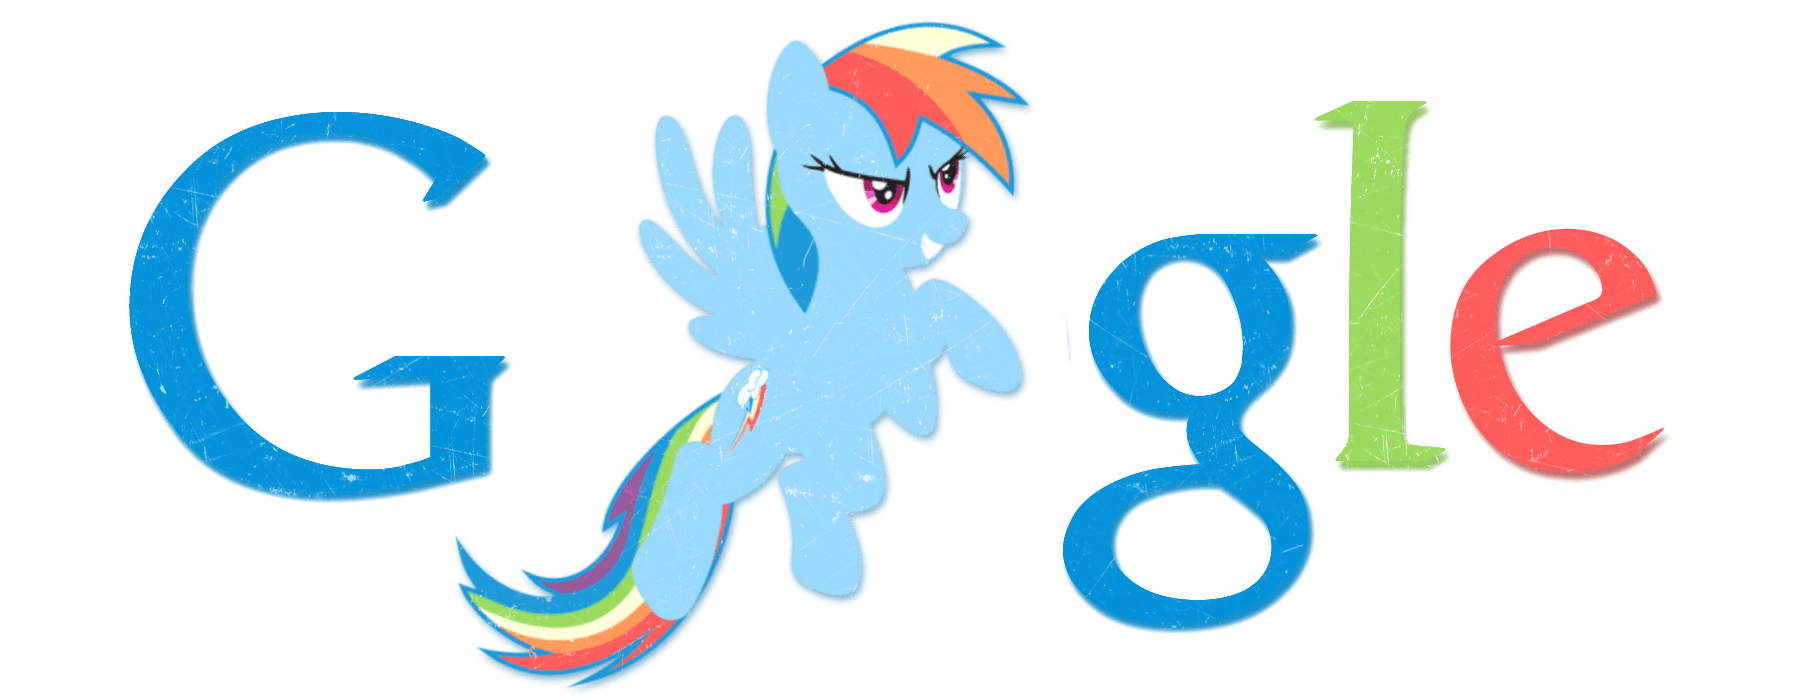 Best Google Logo - The Best Google Logo - My Little Pony (MLP) Logo | Userstyles.org